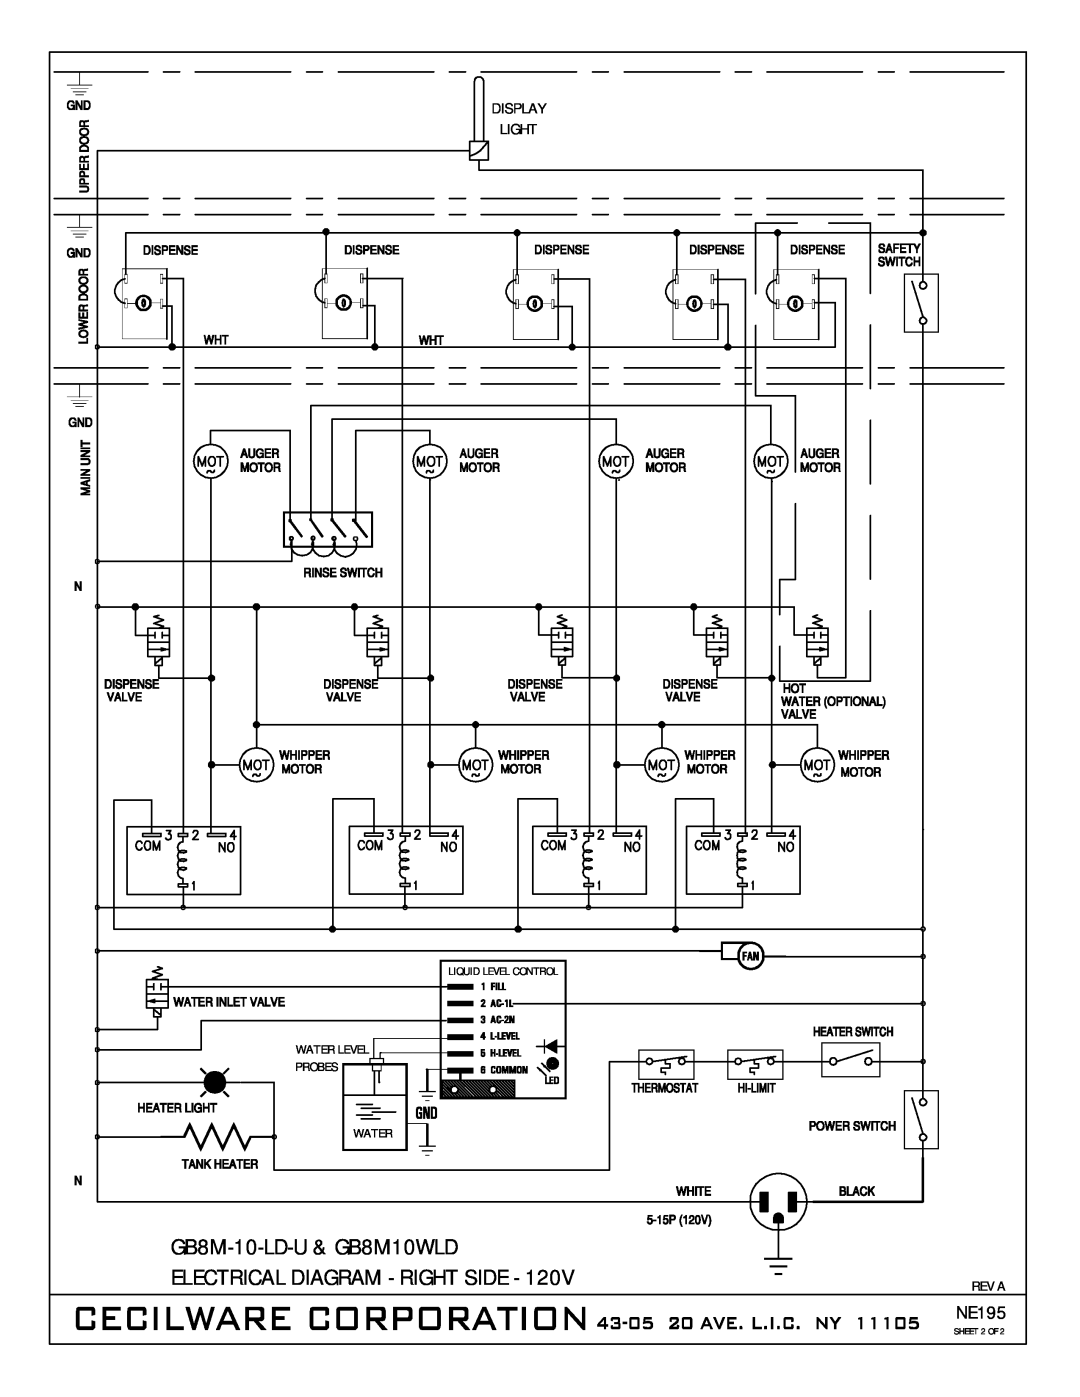 Cecilware GB5-LD-U Electrical Diagram - Right Side, GB8M-10-LD-U& GB8M10WLD, Display, Light, NE195, Liquid Level Control 